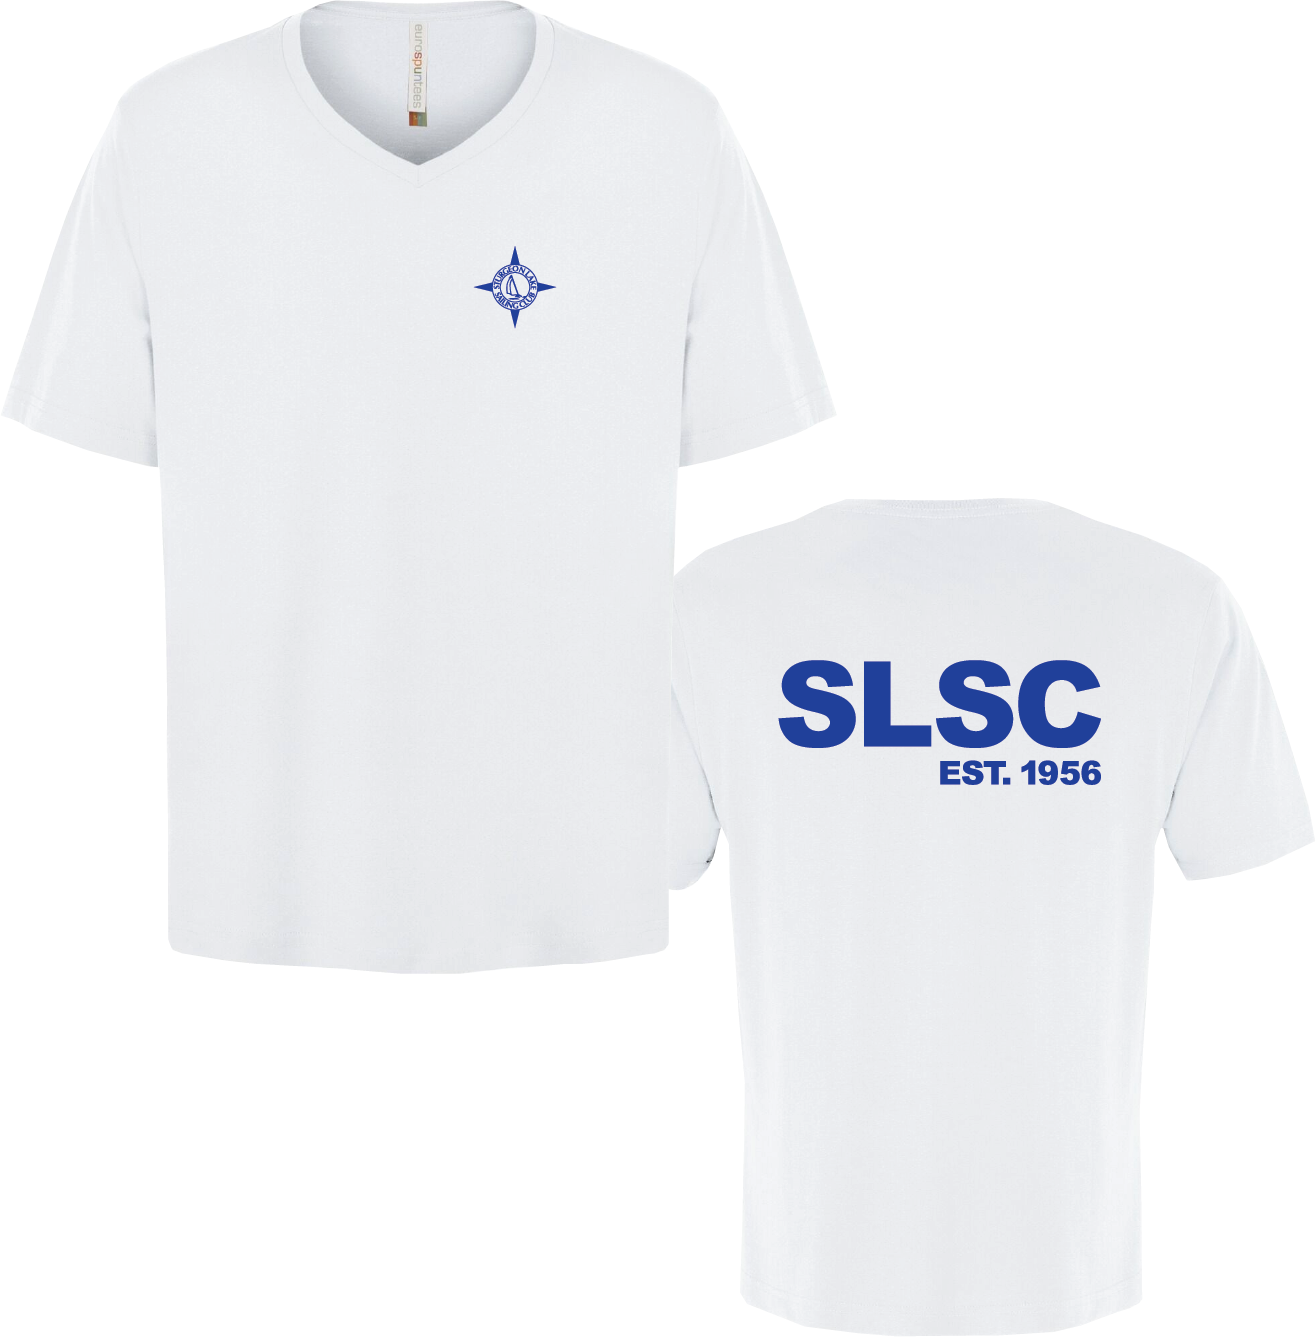 Sturgeon Lake V-Neck T-shirt -